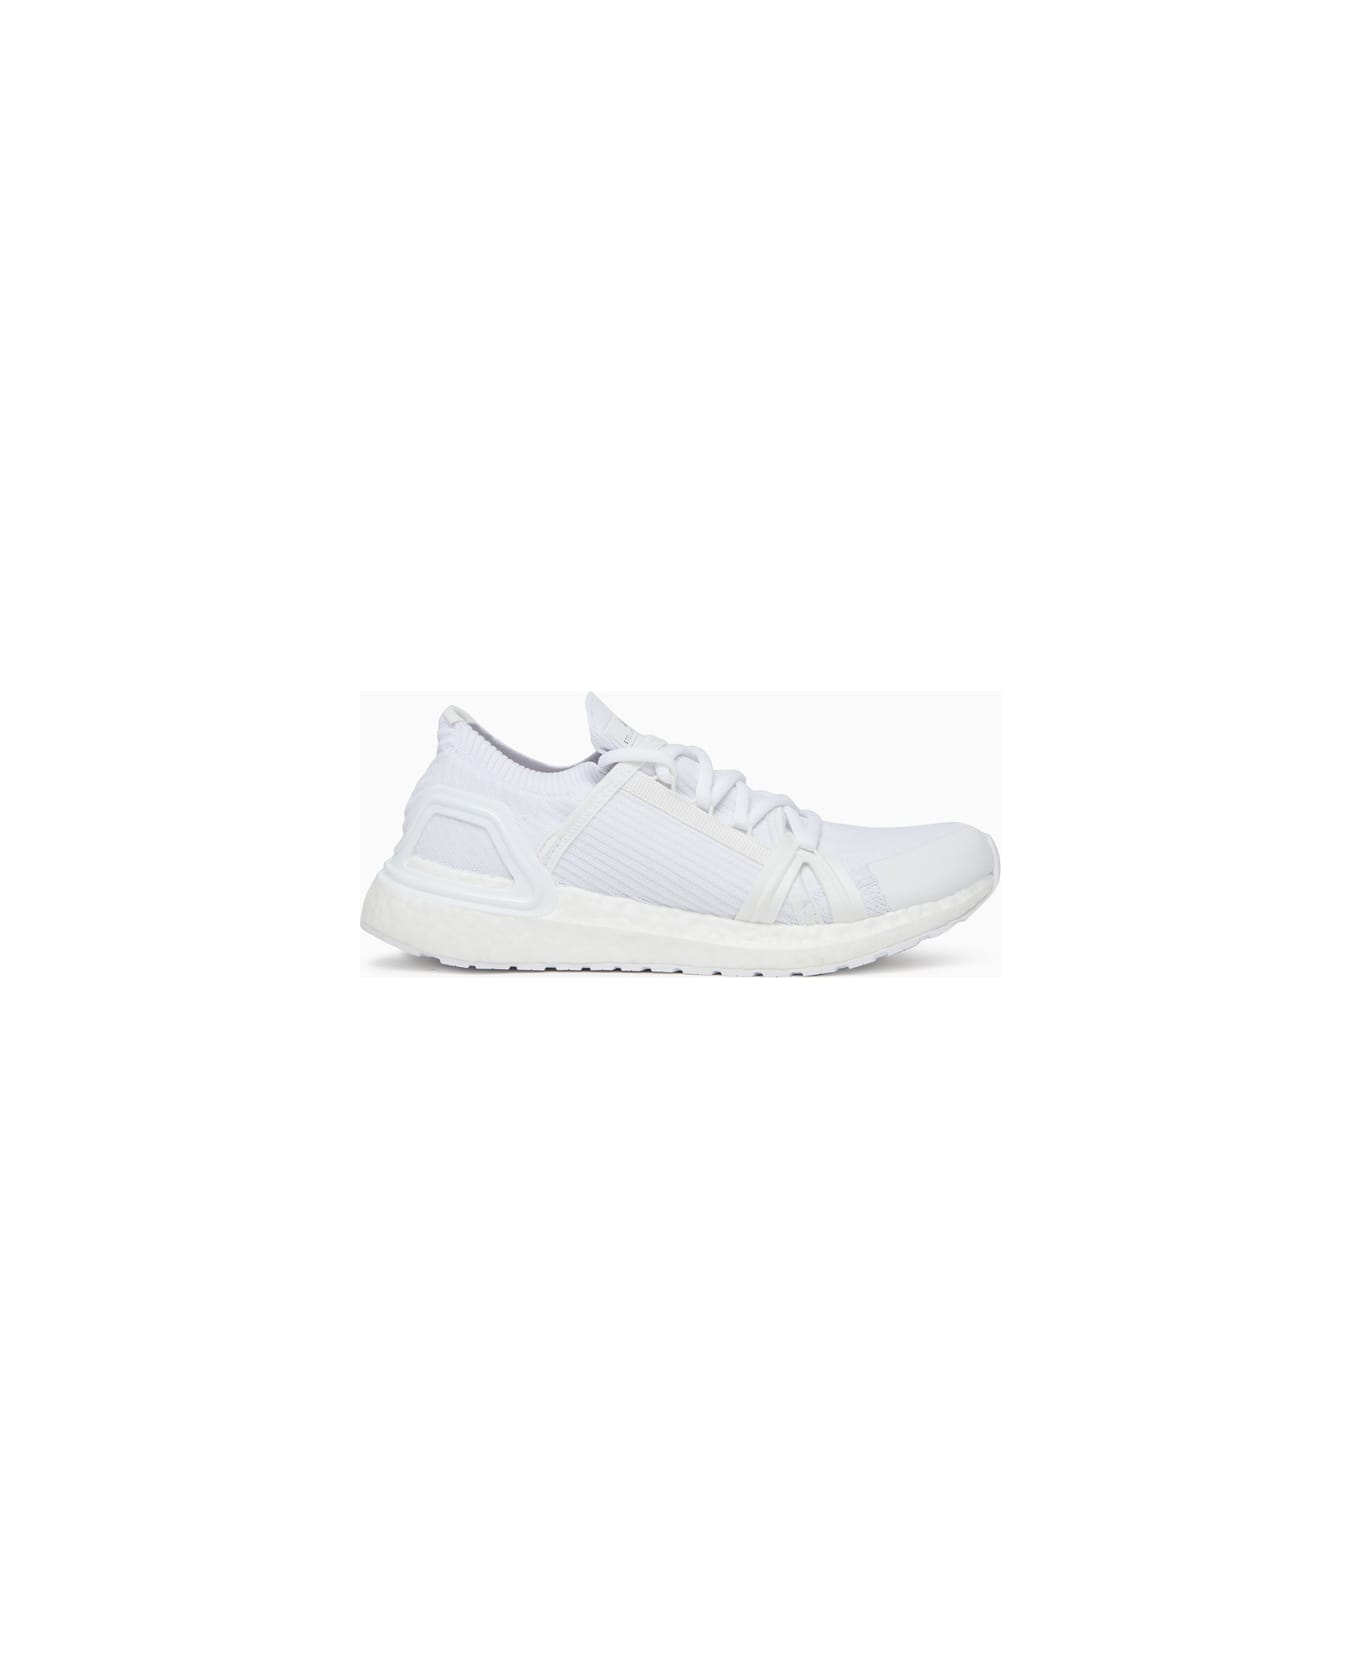 Adidas by Stella McCartney Asmc Ultraboost 20 Sneakers Hp6701 - White